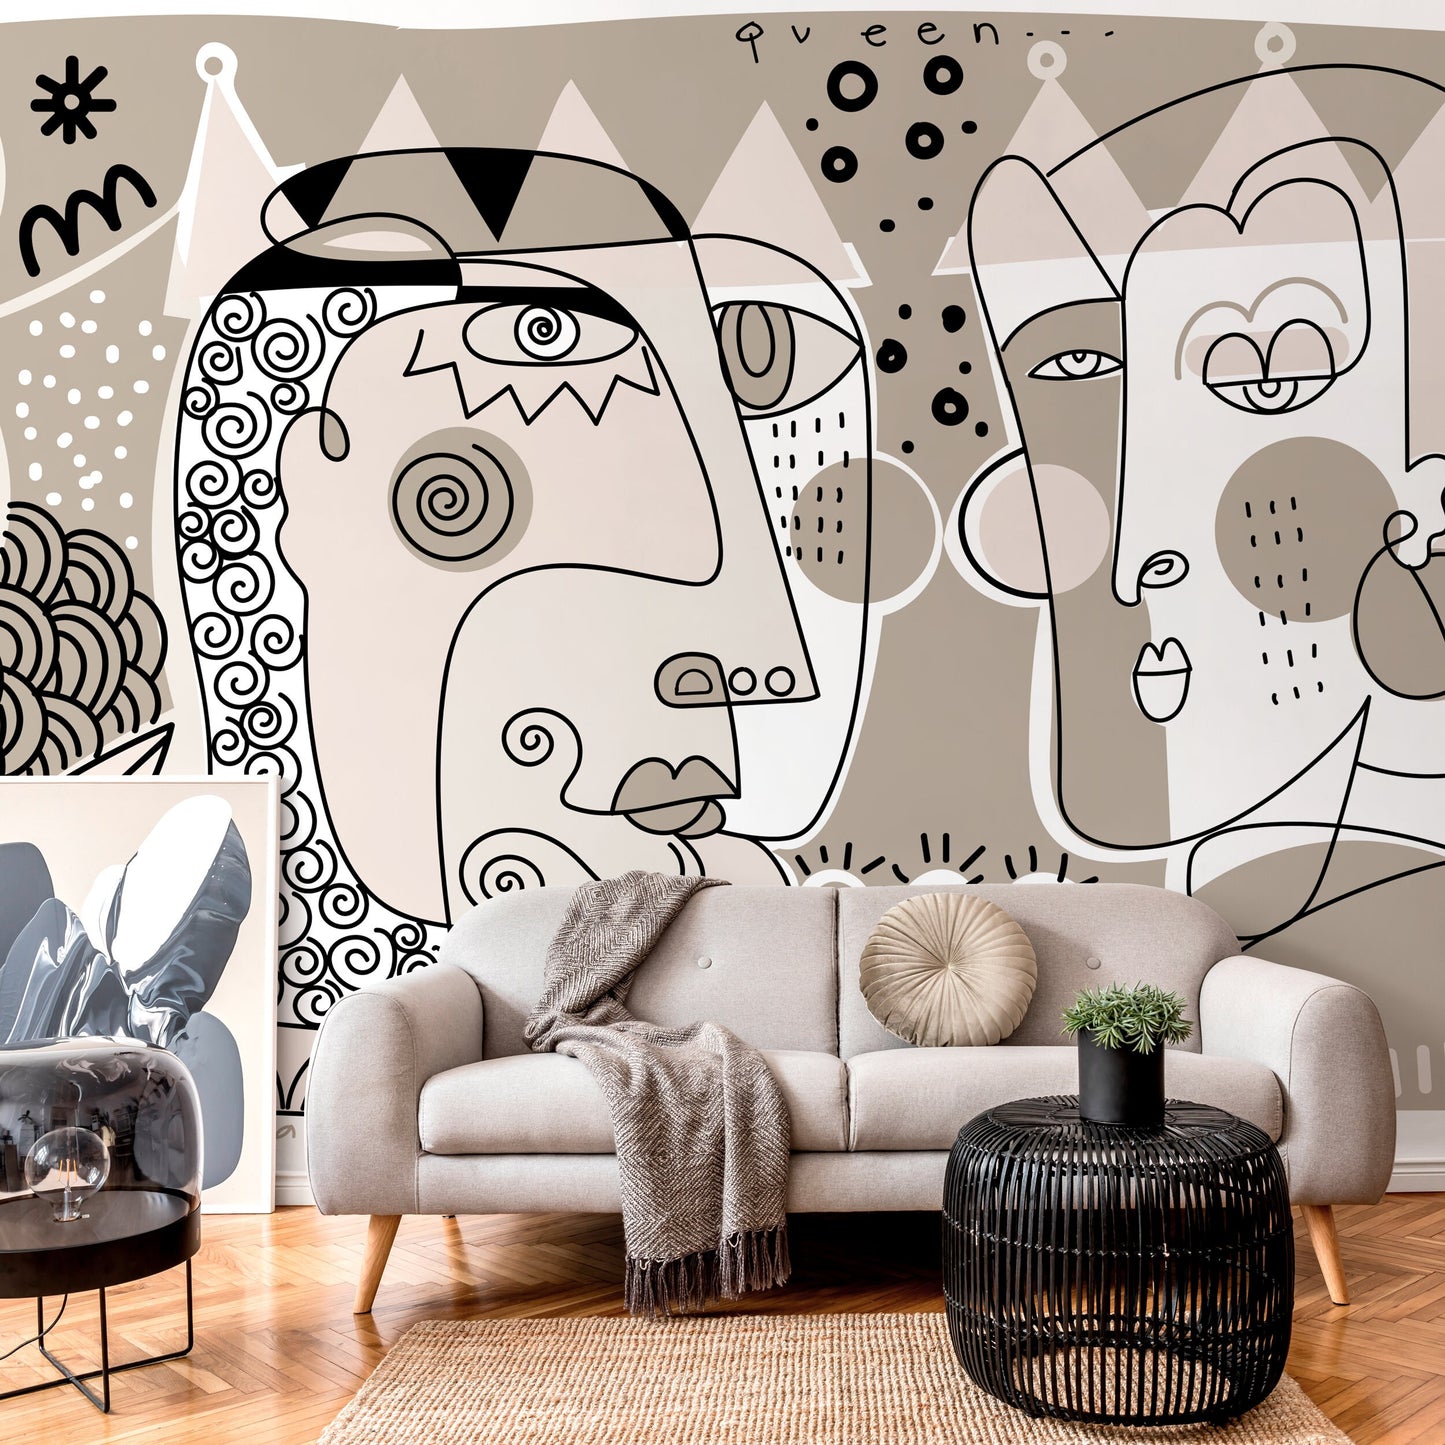 Neutral Line Art Mural Abstract Wallpaper Hand Drawing Wallpaper Peel and Stick Wallpaper Home Decor - D583